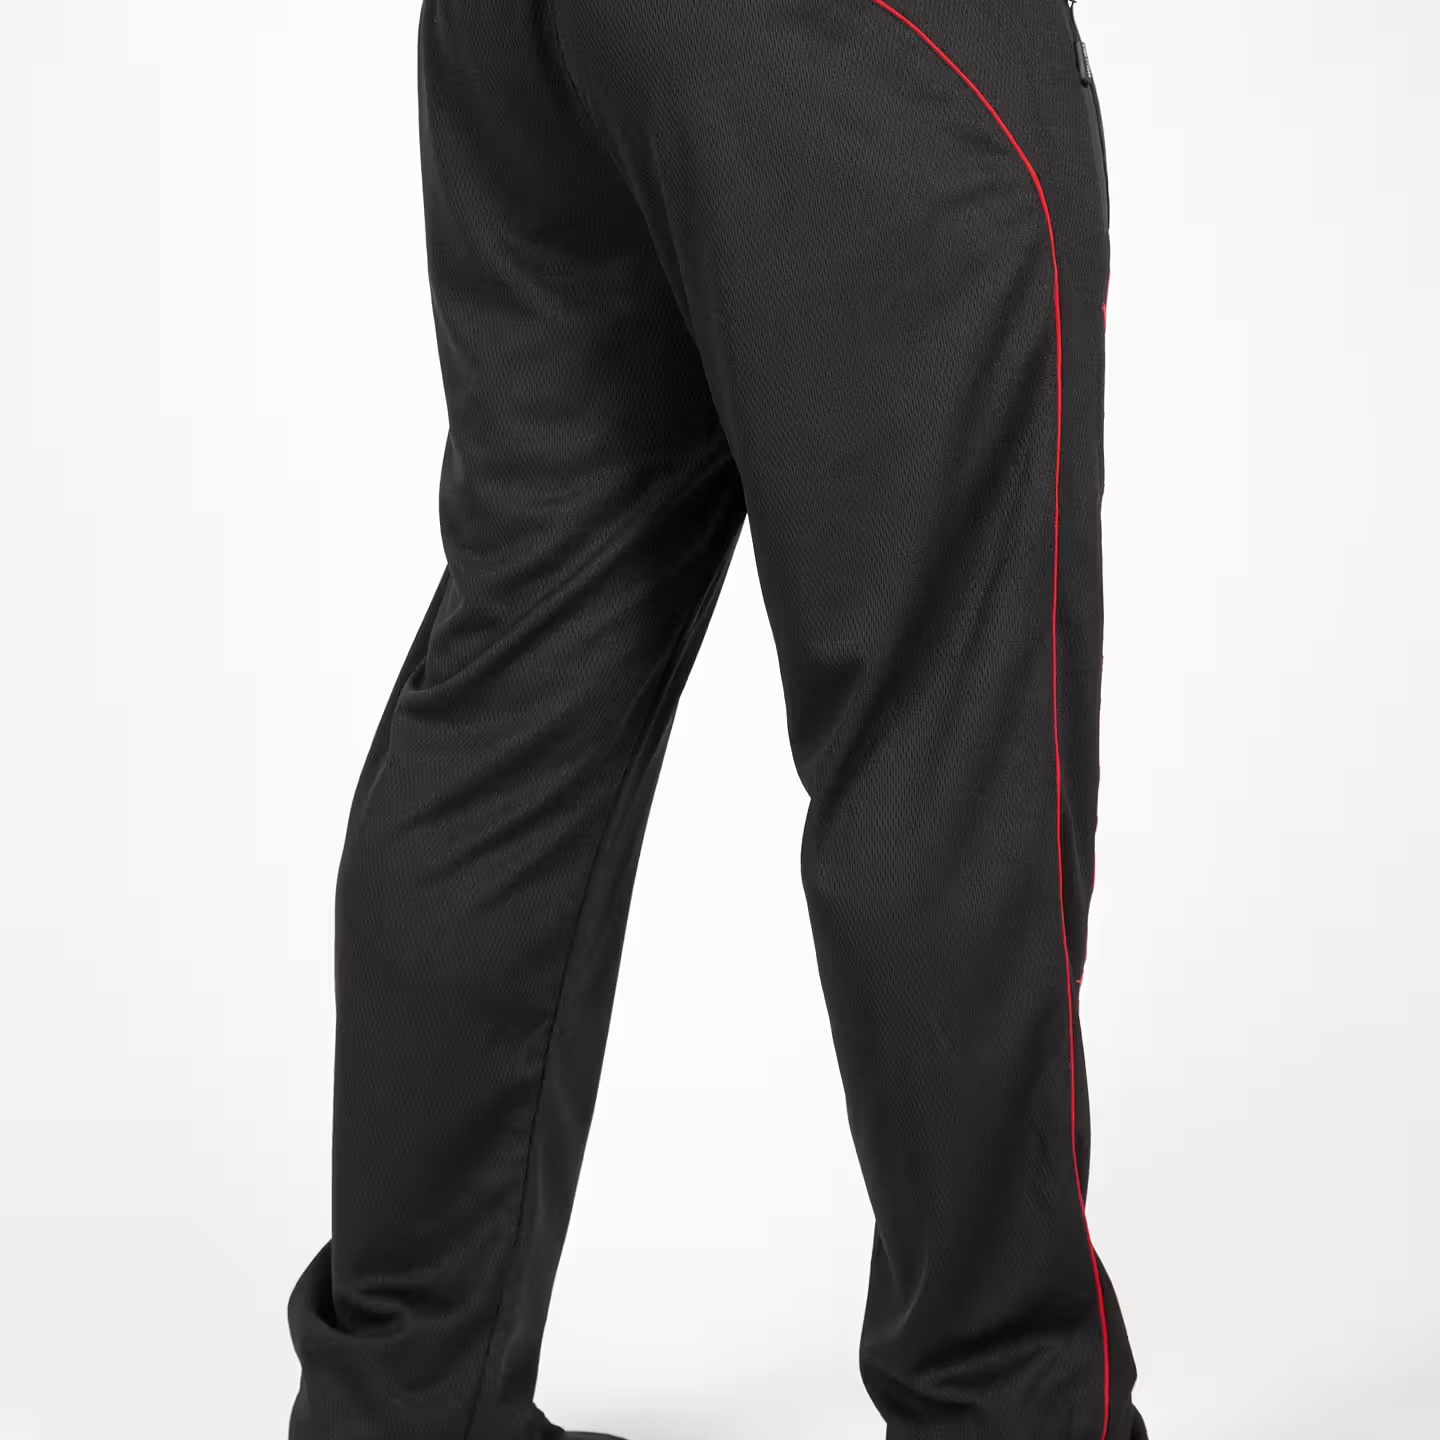 Gorilla Wear - Mercury Mesh Pants, black/red